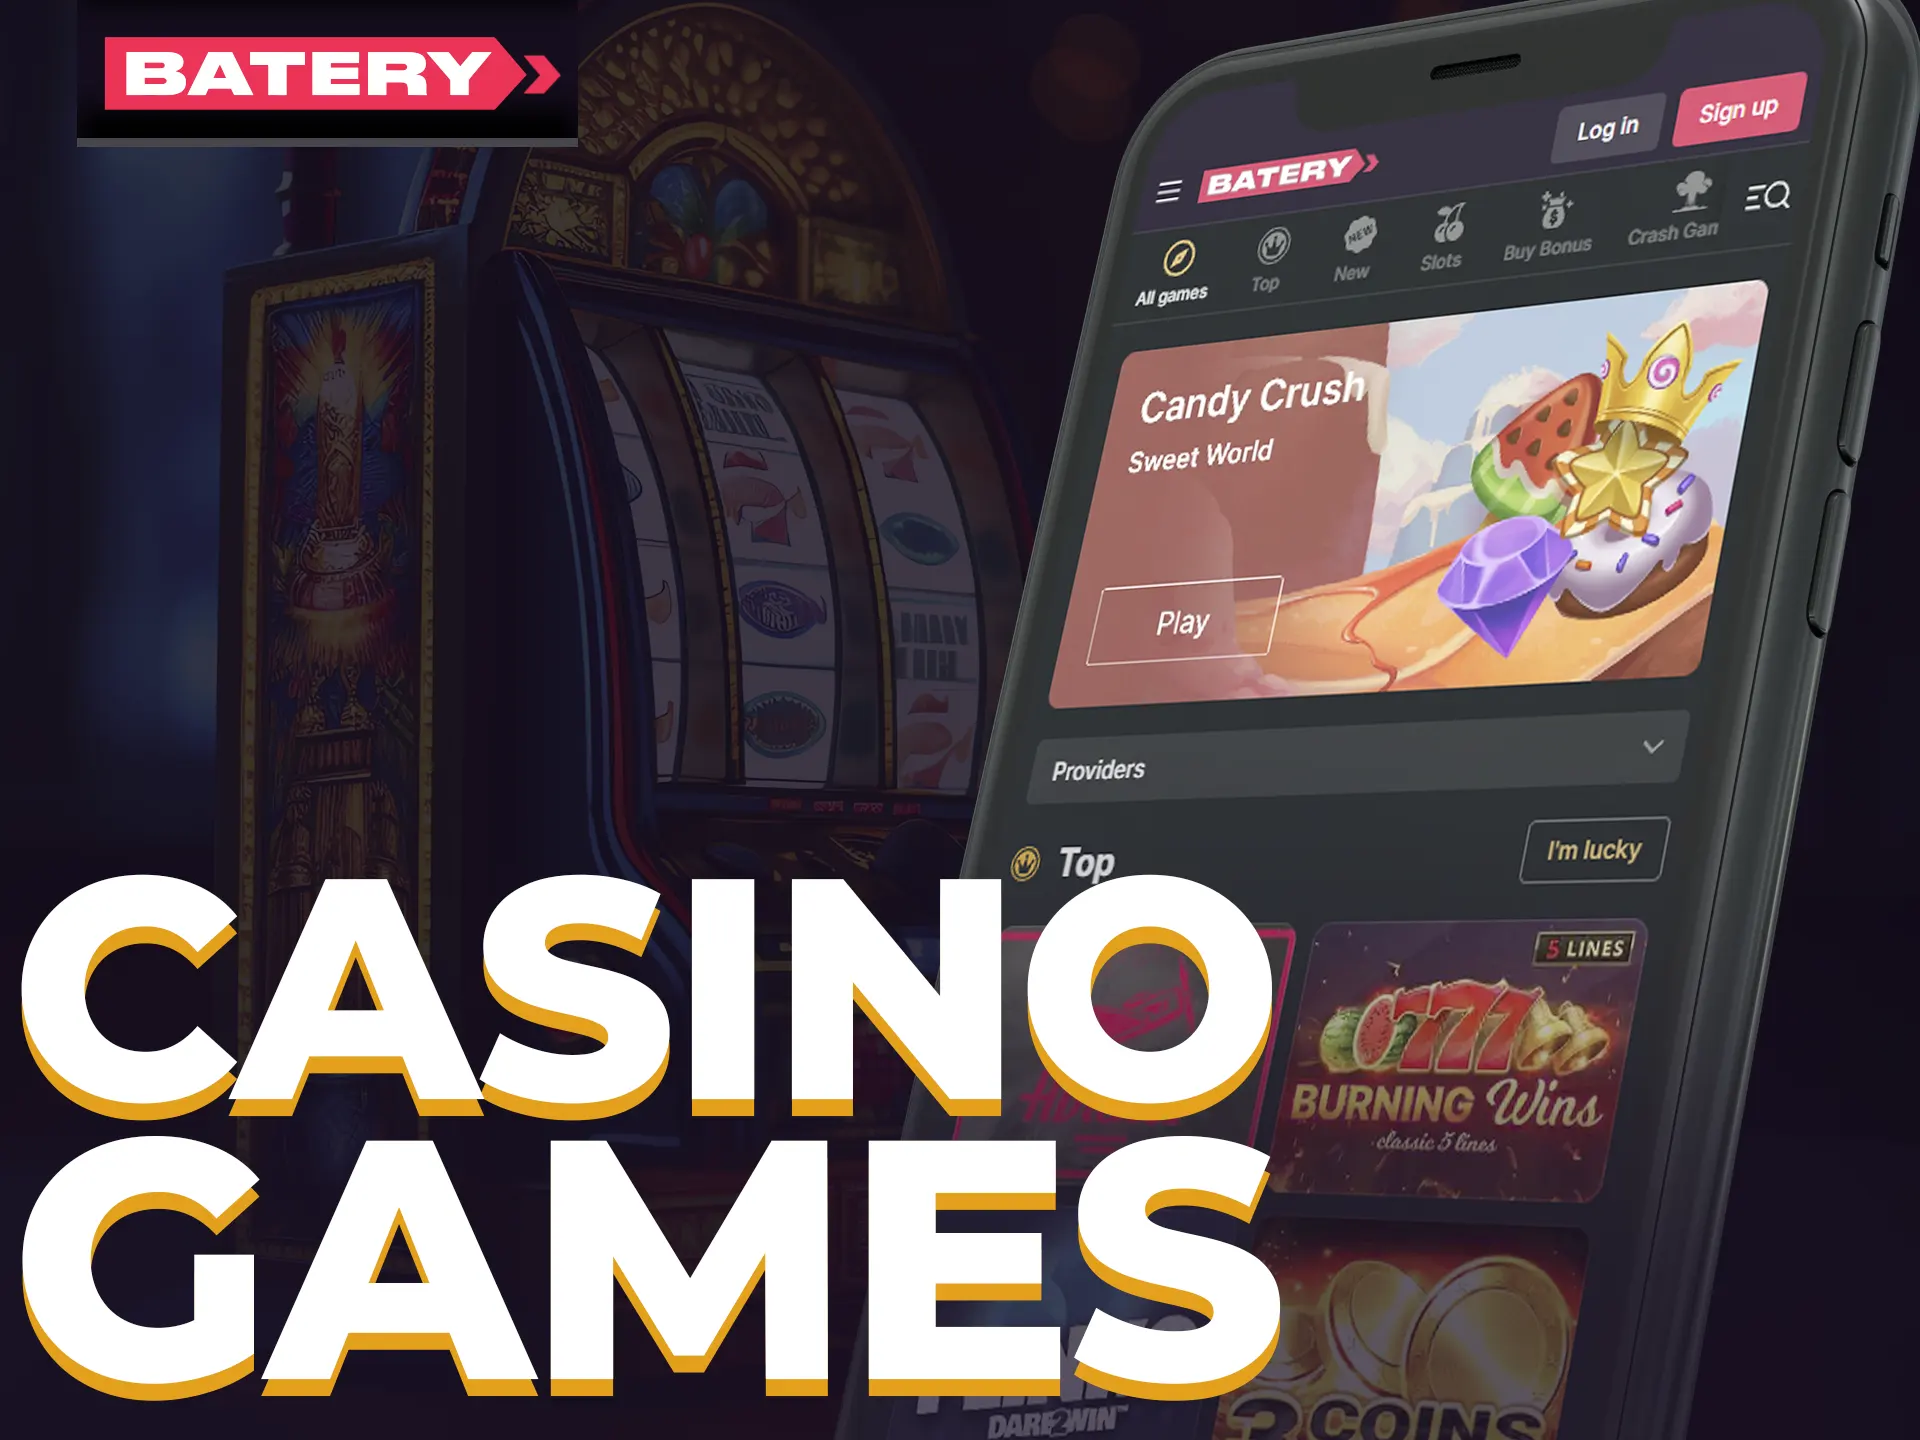 Batery App Casino Games provides 4000+ options, including Crash Games, Plinko, Card Games, Scratch Cards.